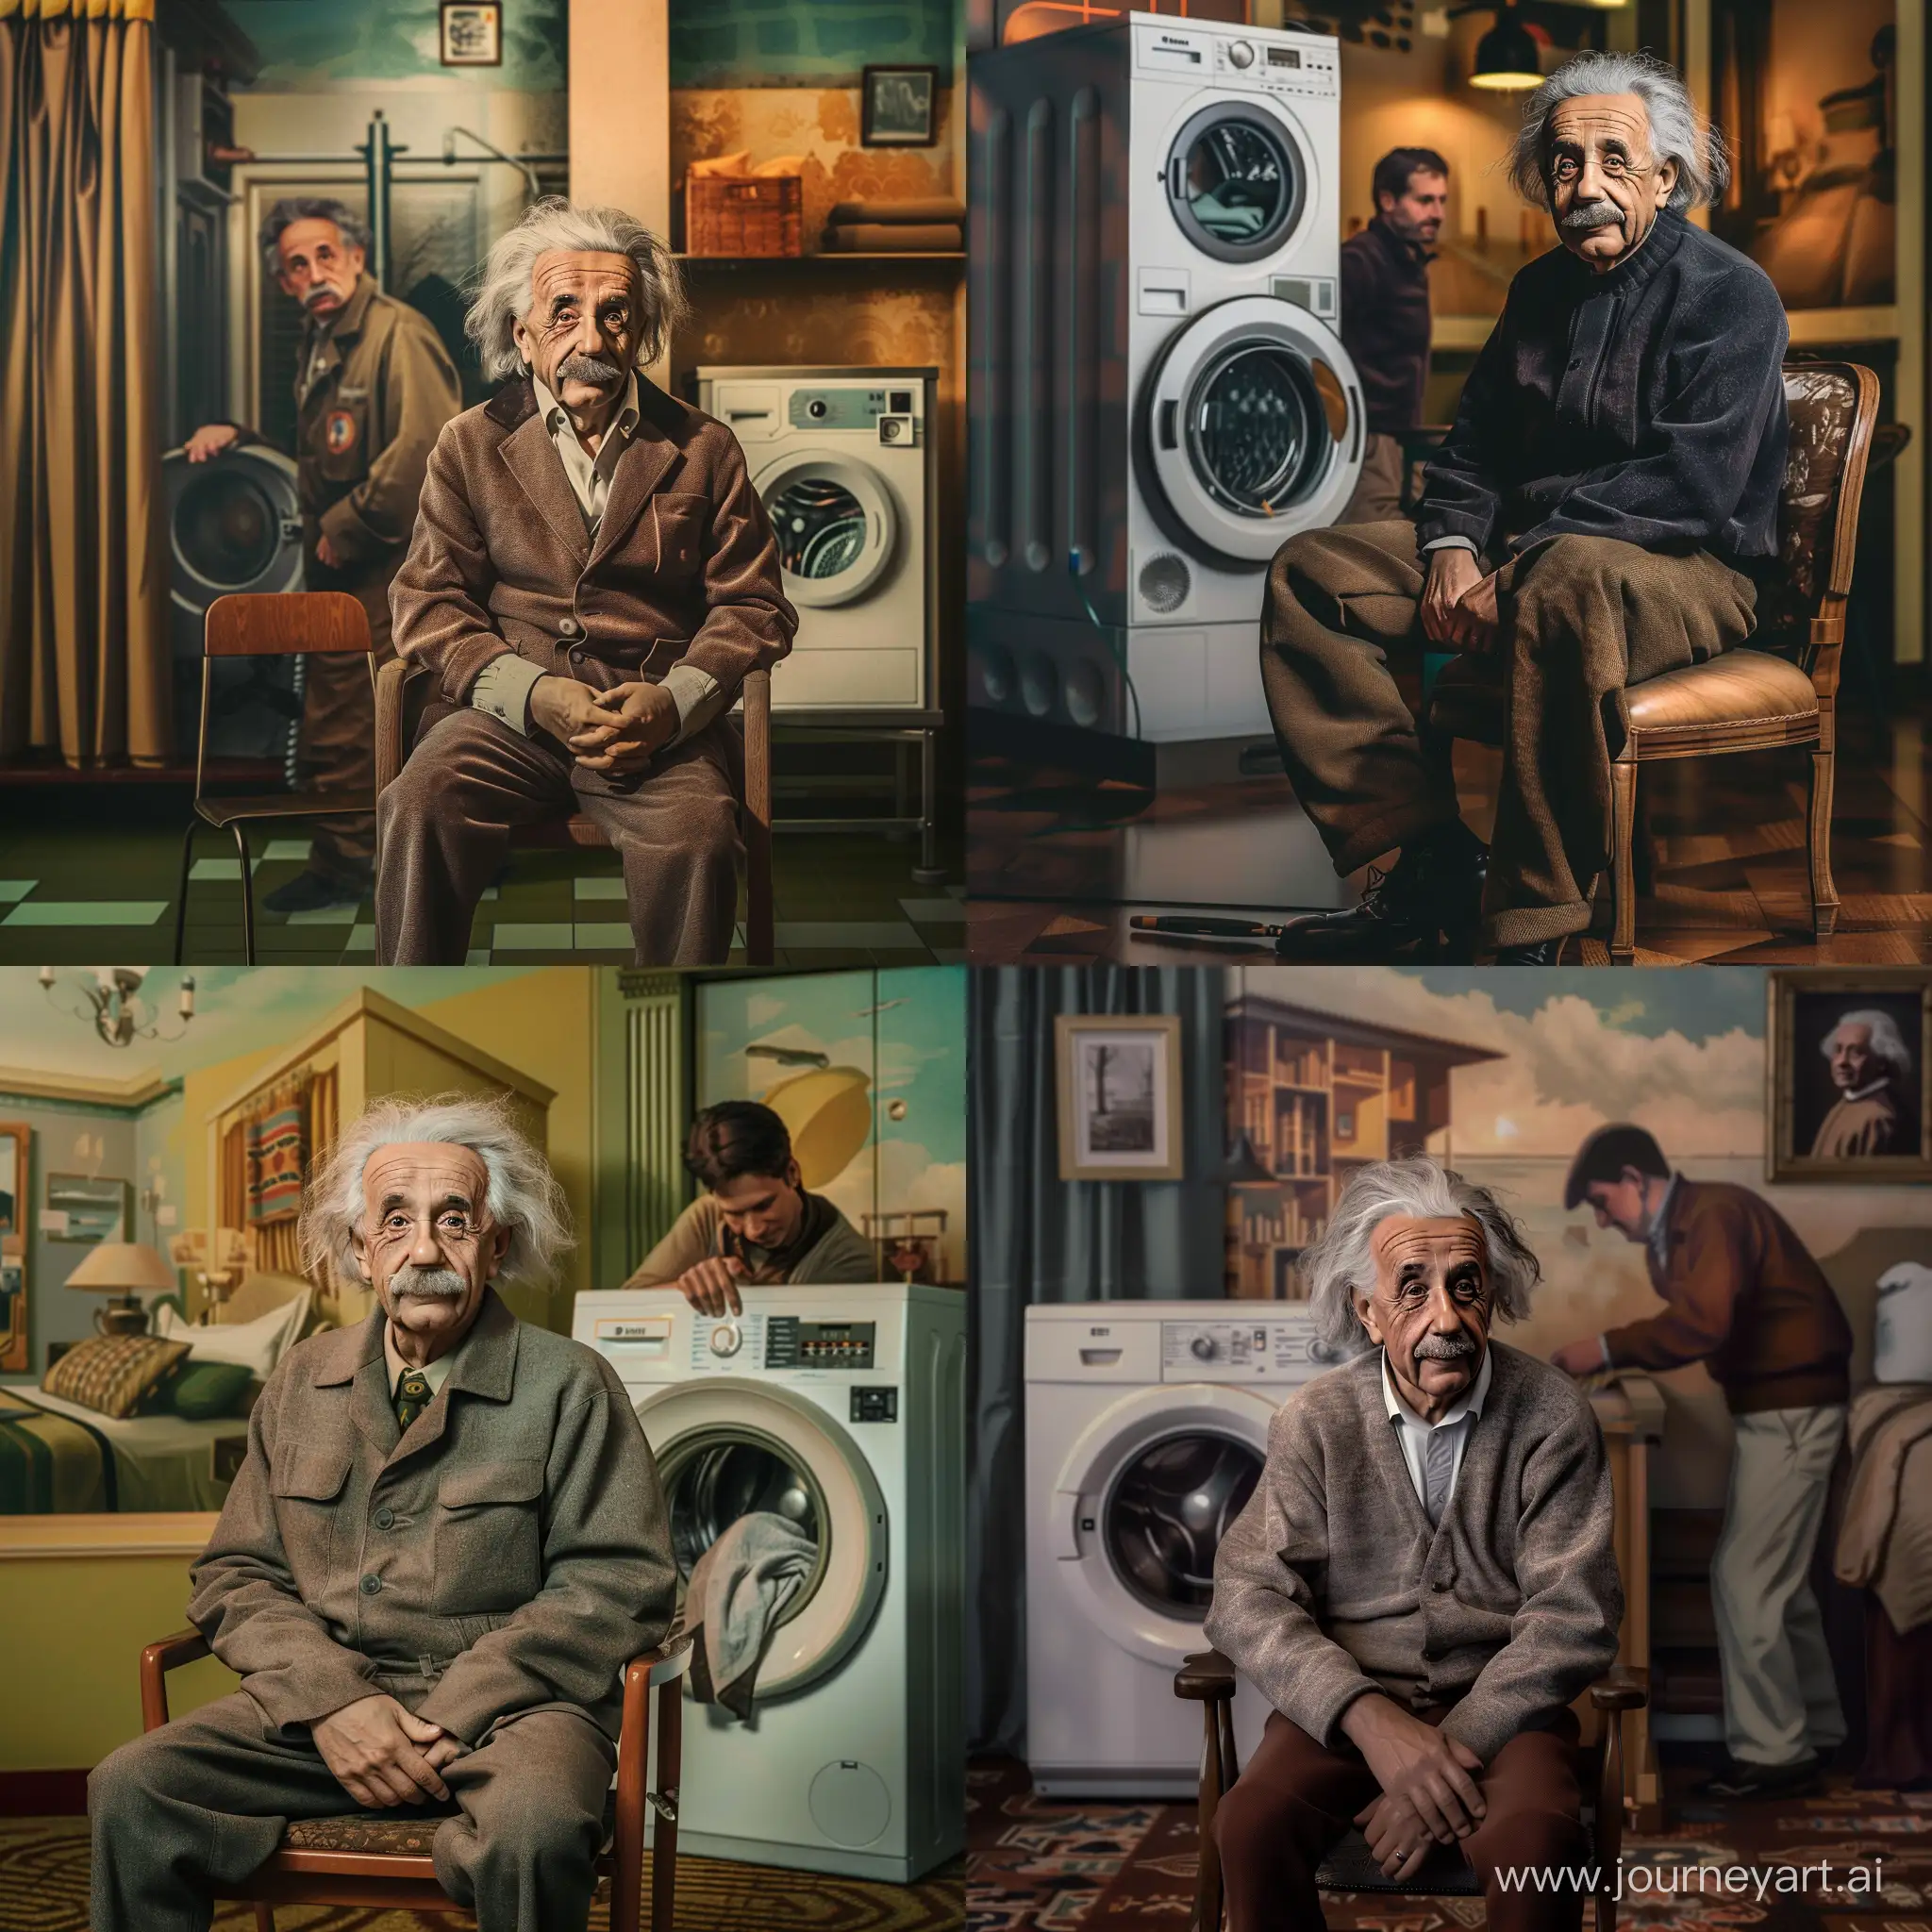 Albert-Einstein-Smiling-in-Hotel-Room-While-Waiting-for-Washing-Machine-Repair